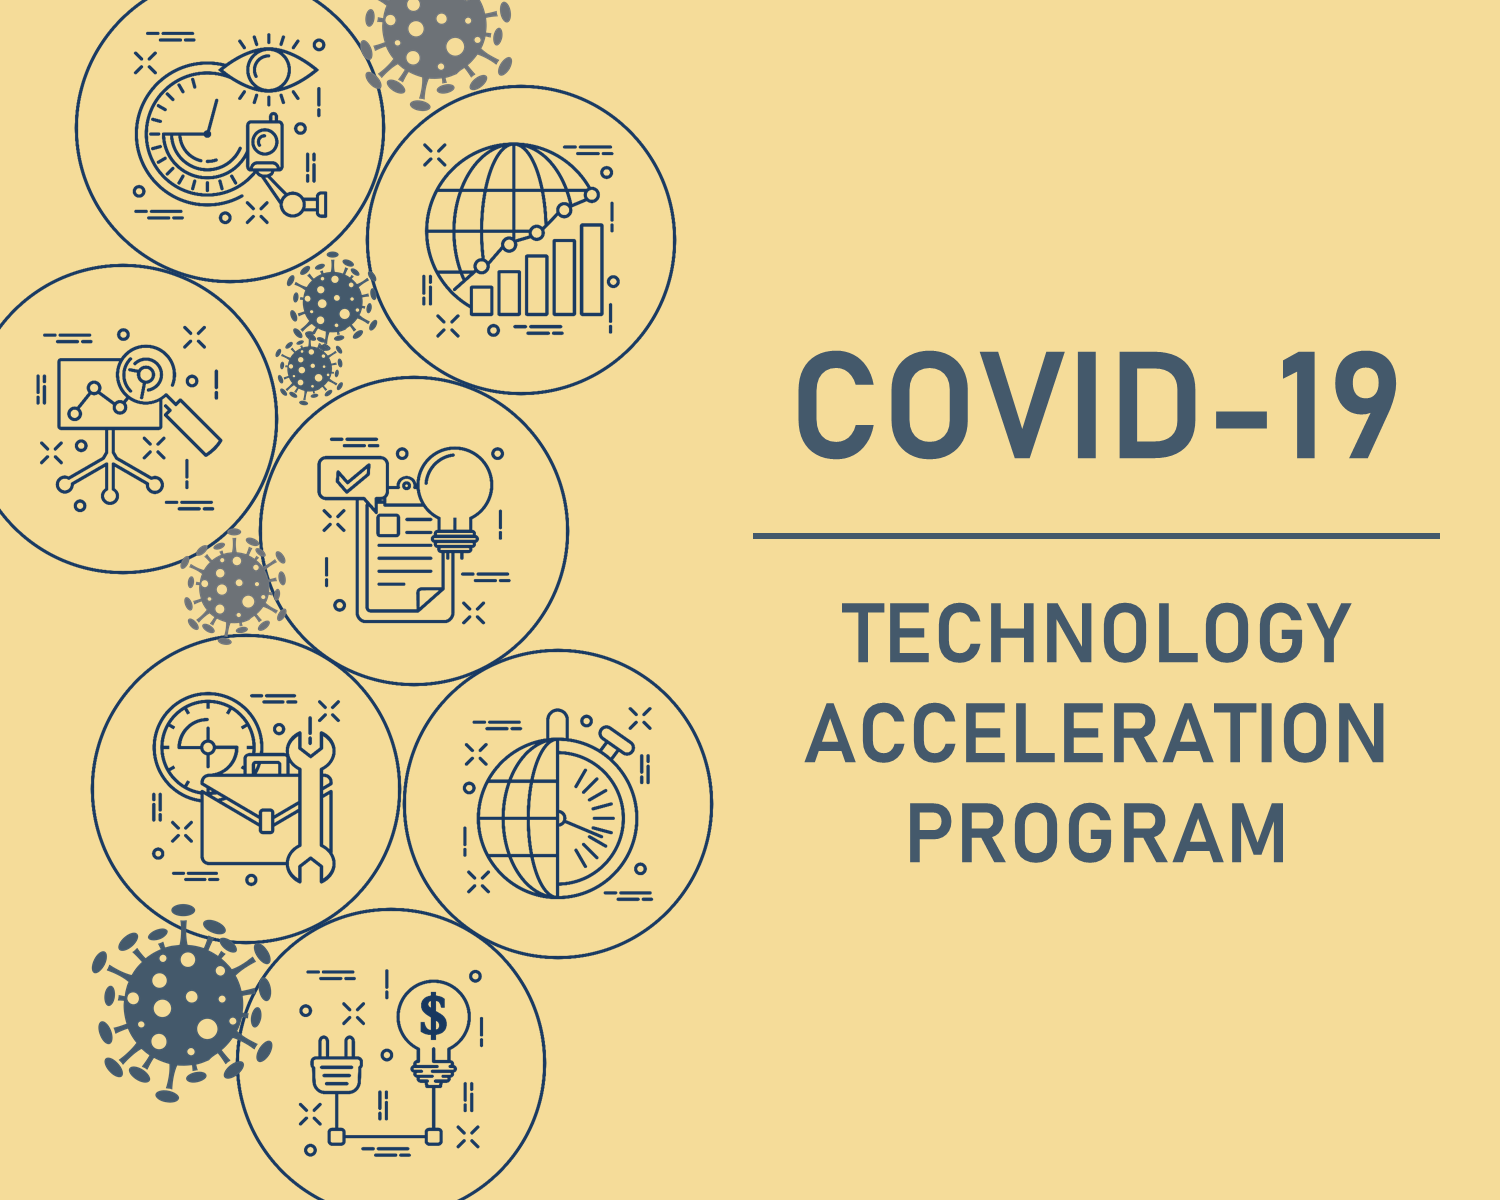 Image: COVID-19 Technology Acceleration Program